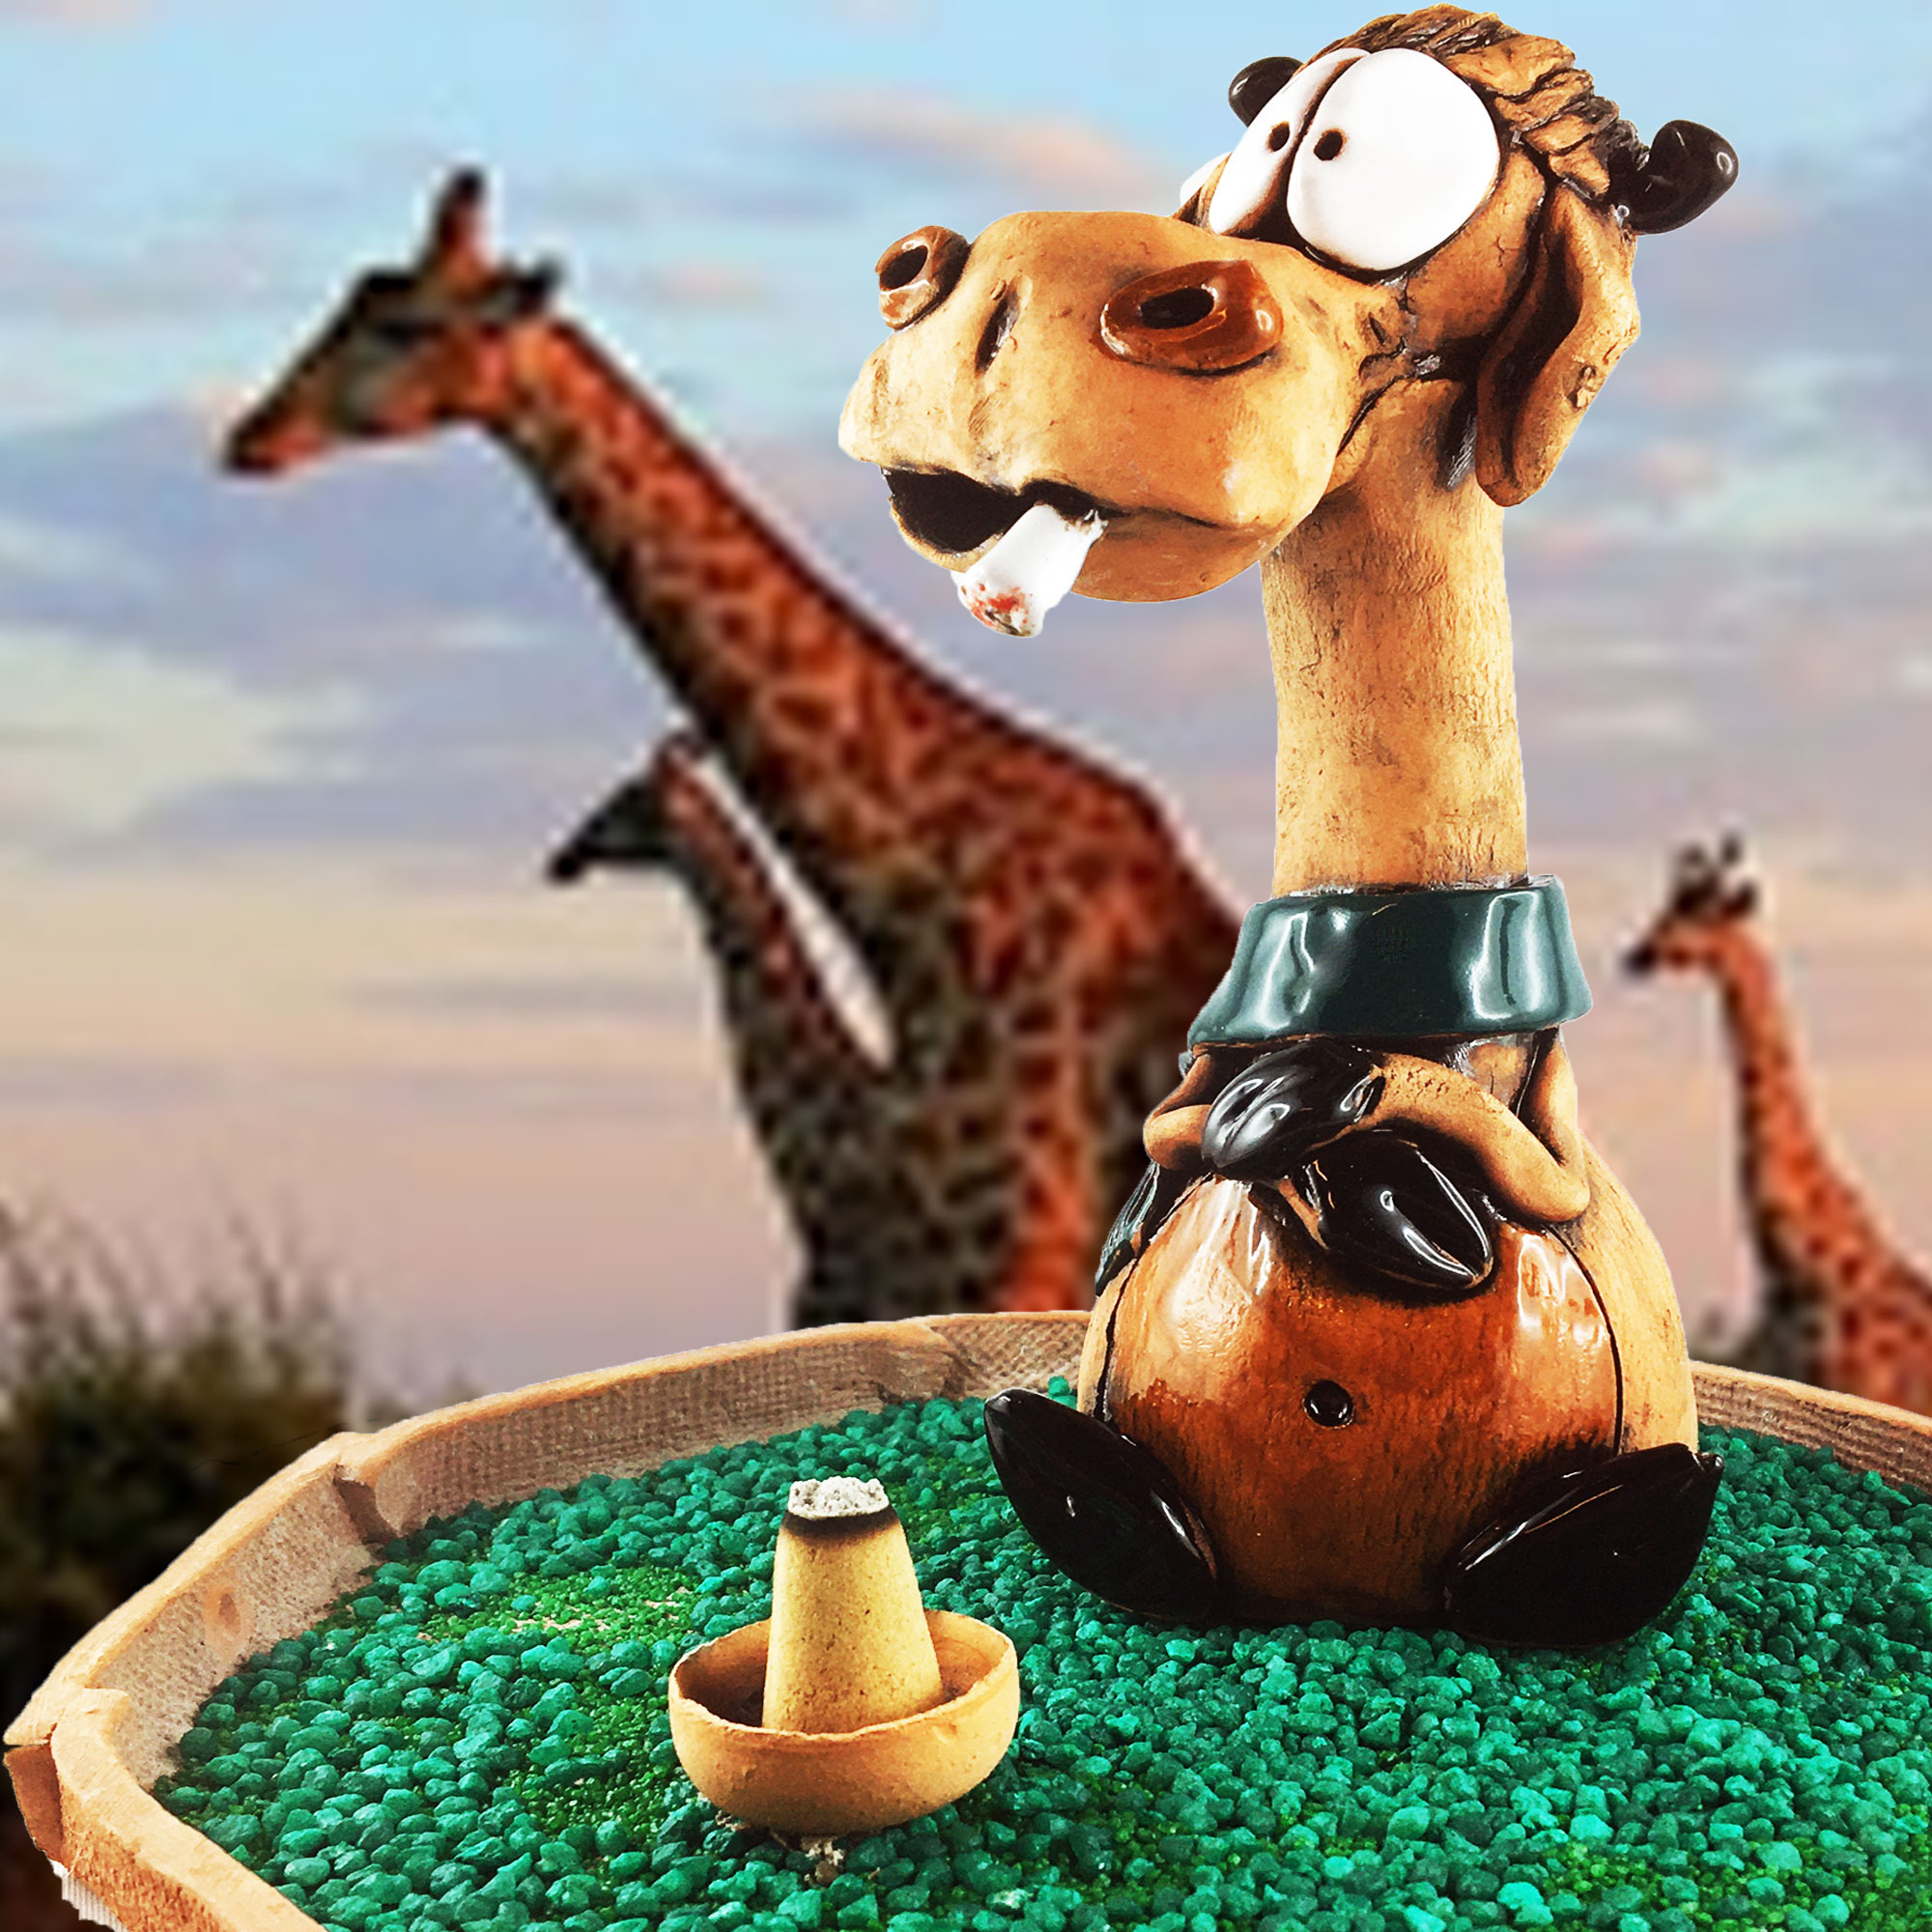 Giraffe Langhals Komplett-Set